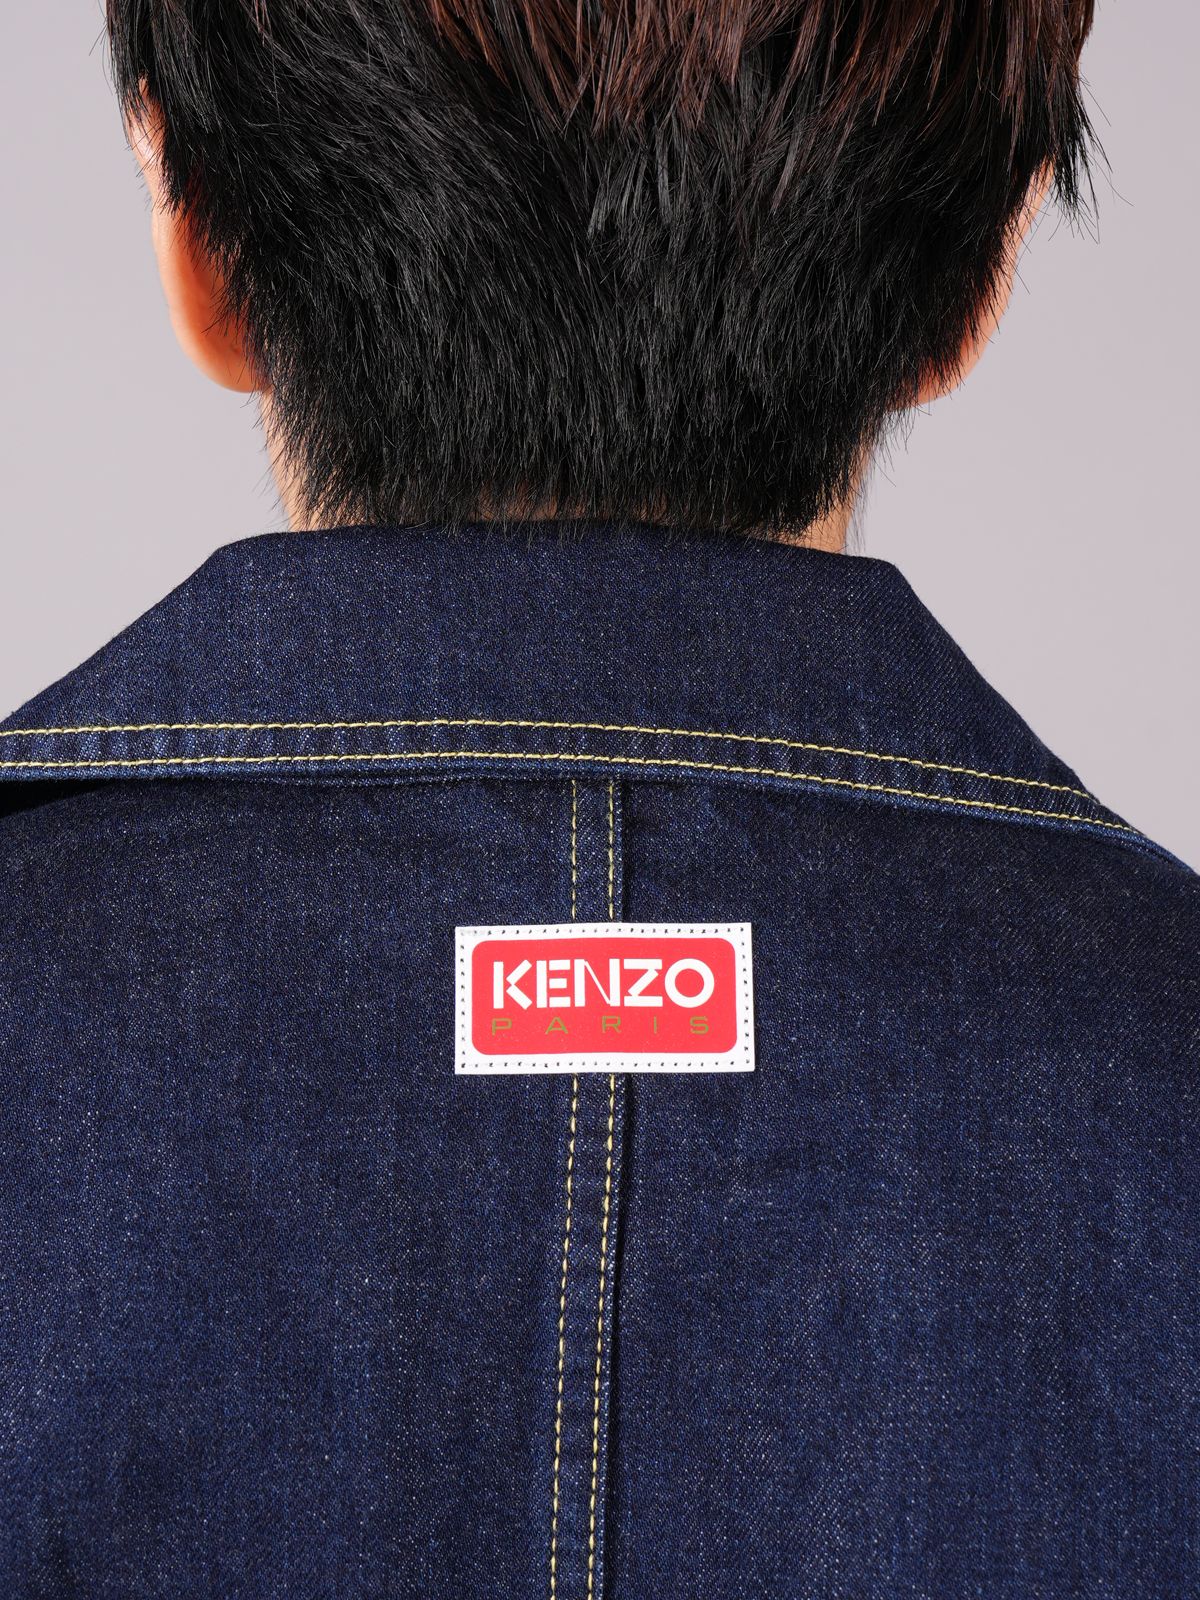 KENZO - 【ラスト1点】'KENZO TARGET' DENIM WORKWEAR